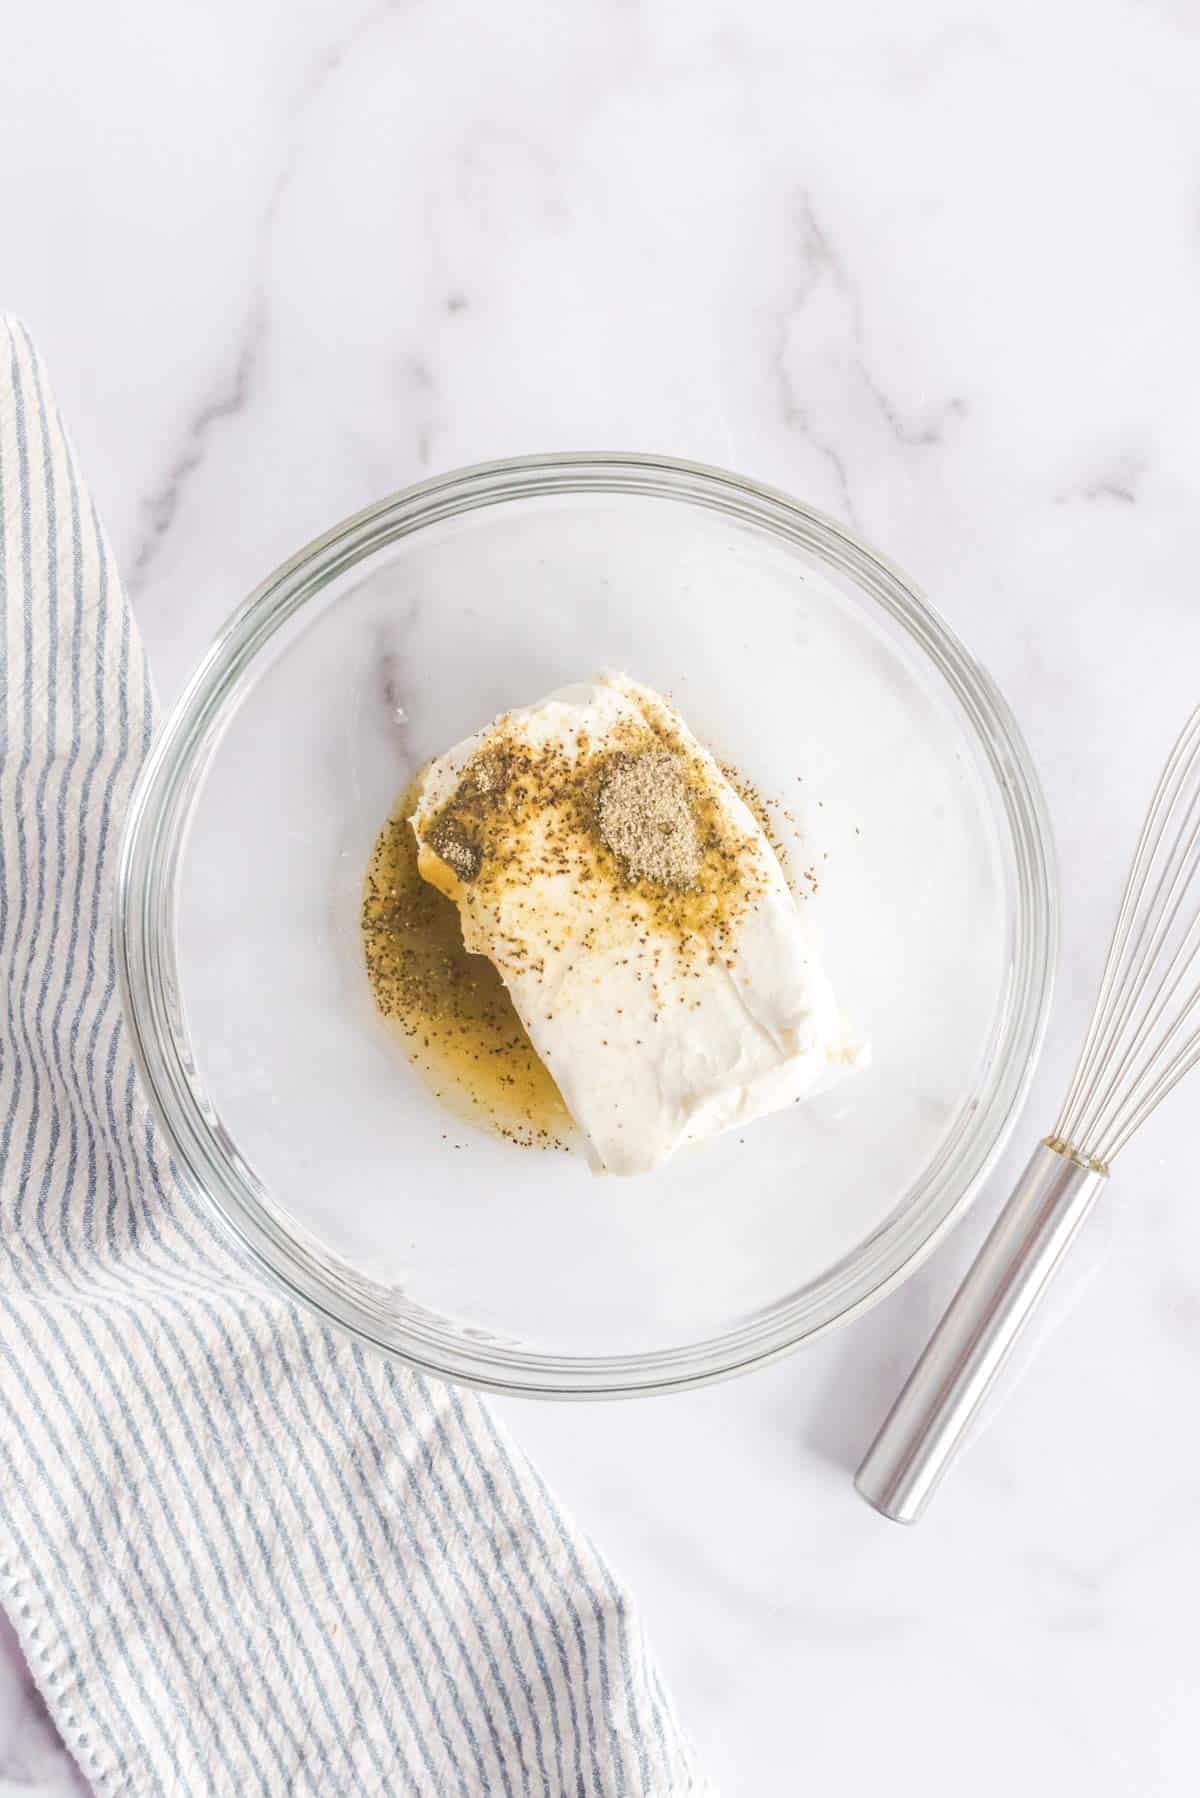 Cream cheese, garlic, lemon, and Greek seasoning in a bowl.